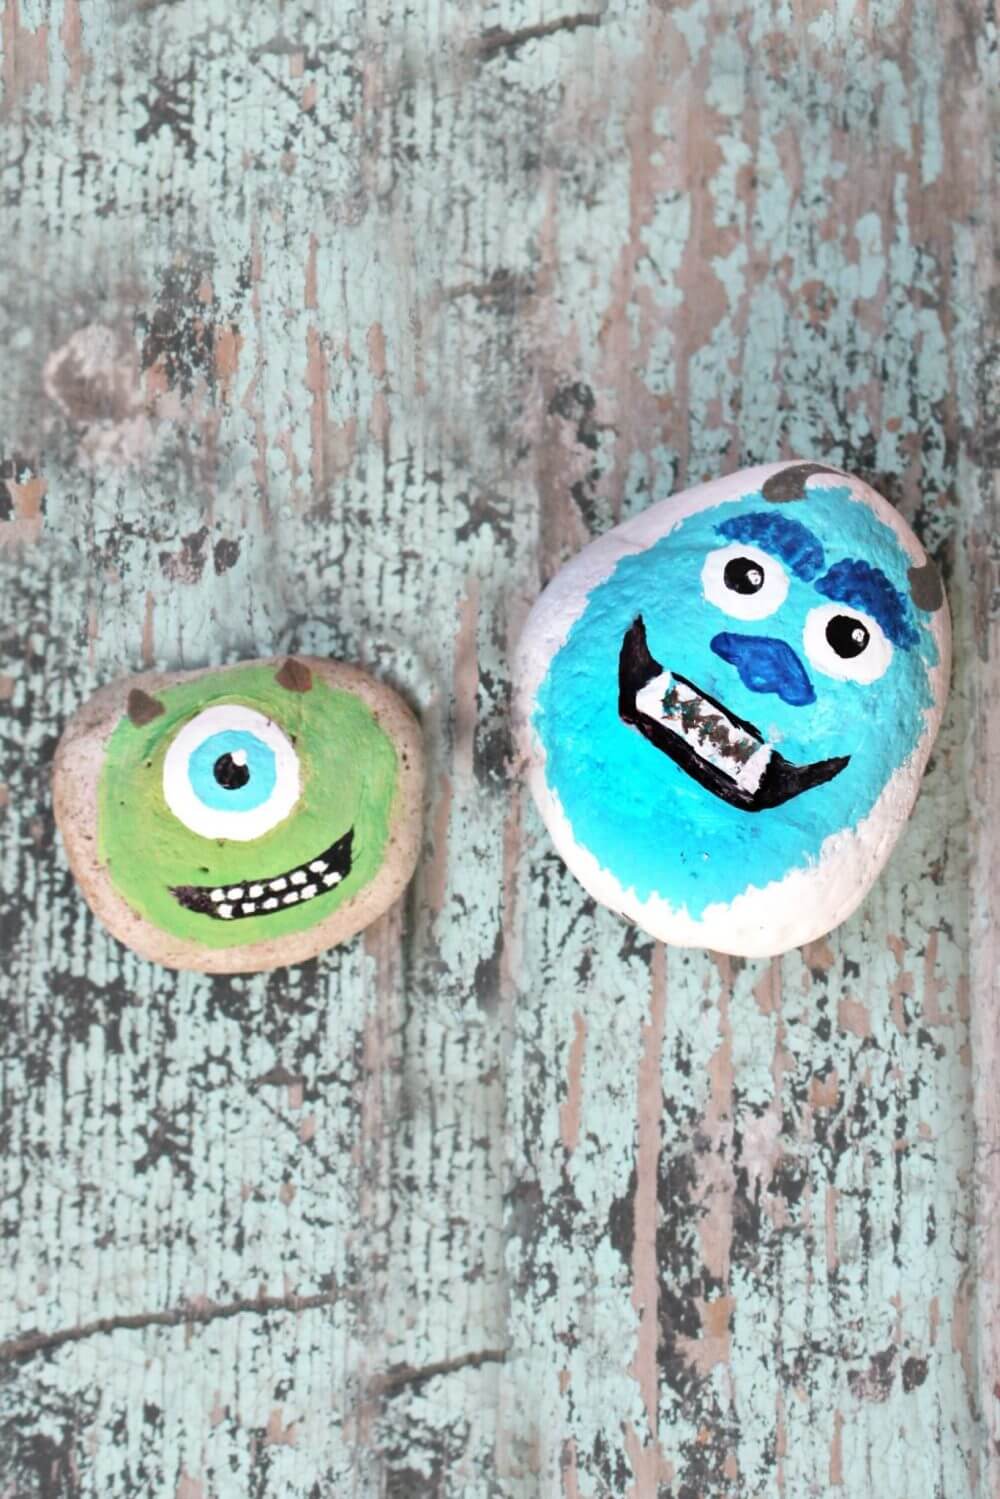 DIY Mike Wazowski Rock Craft For KidsCute Monster Painted Rock Crafts